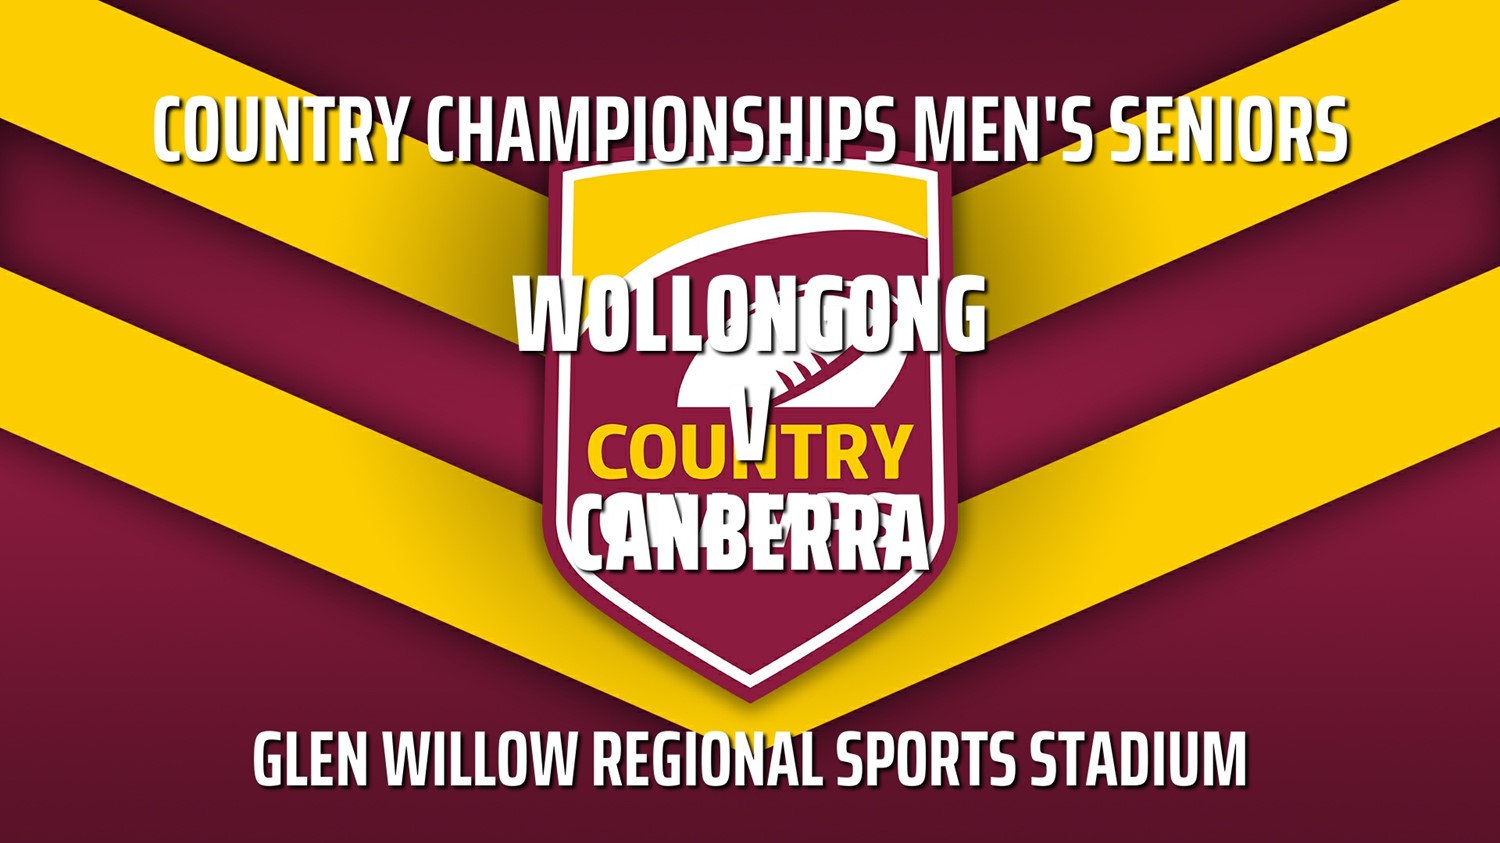 231014-Country Championships Men's Seniors - Wollongong Devils v Canberra Magic Minigame Slate Image